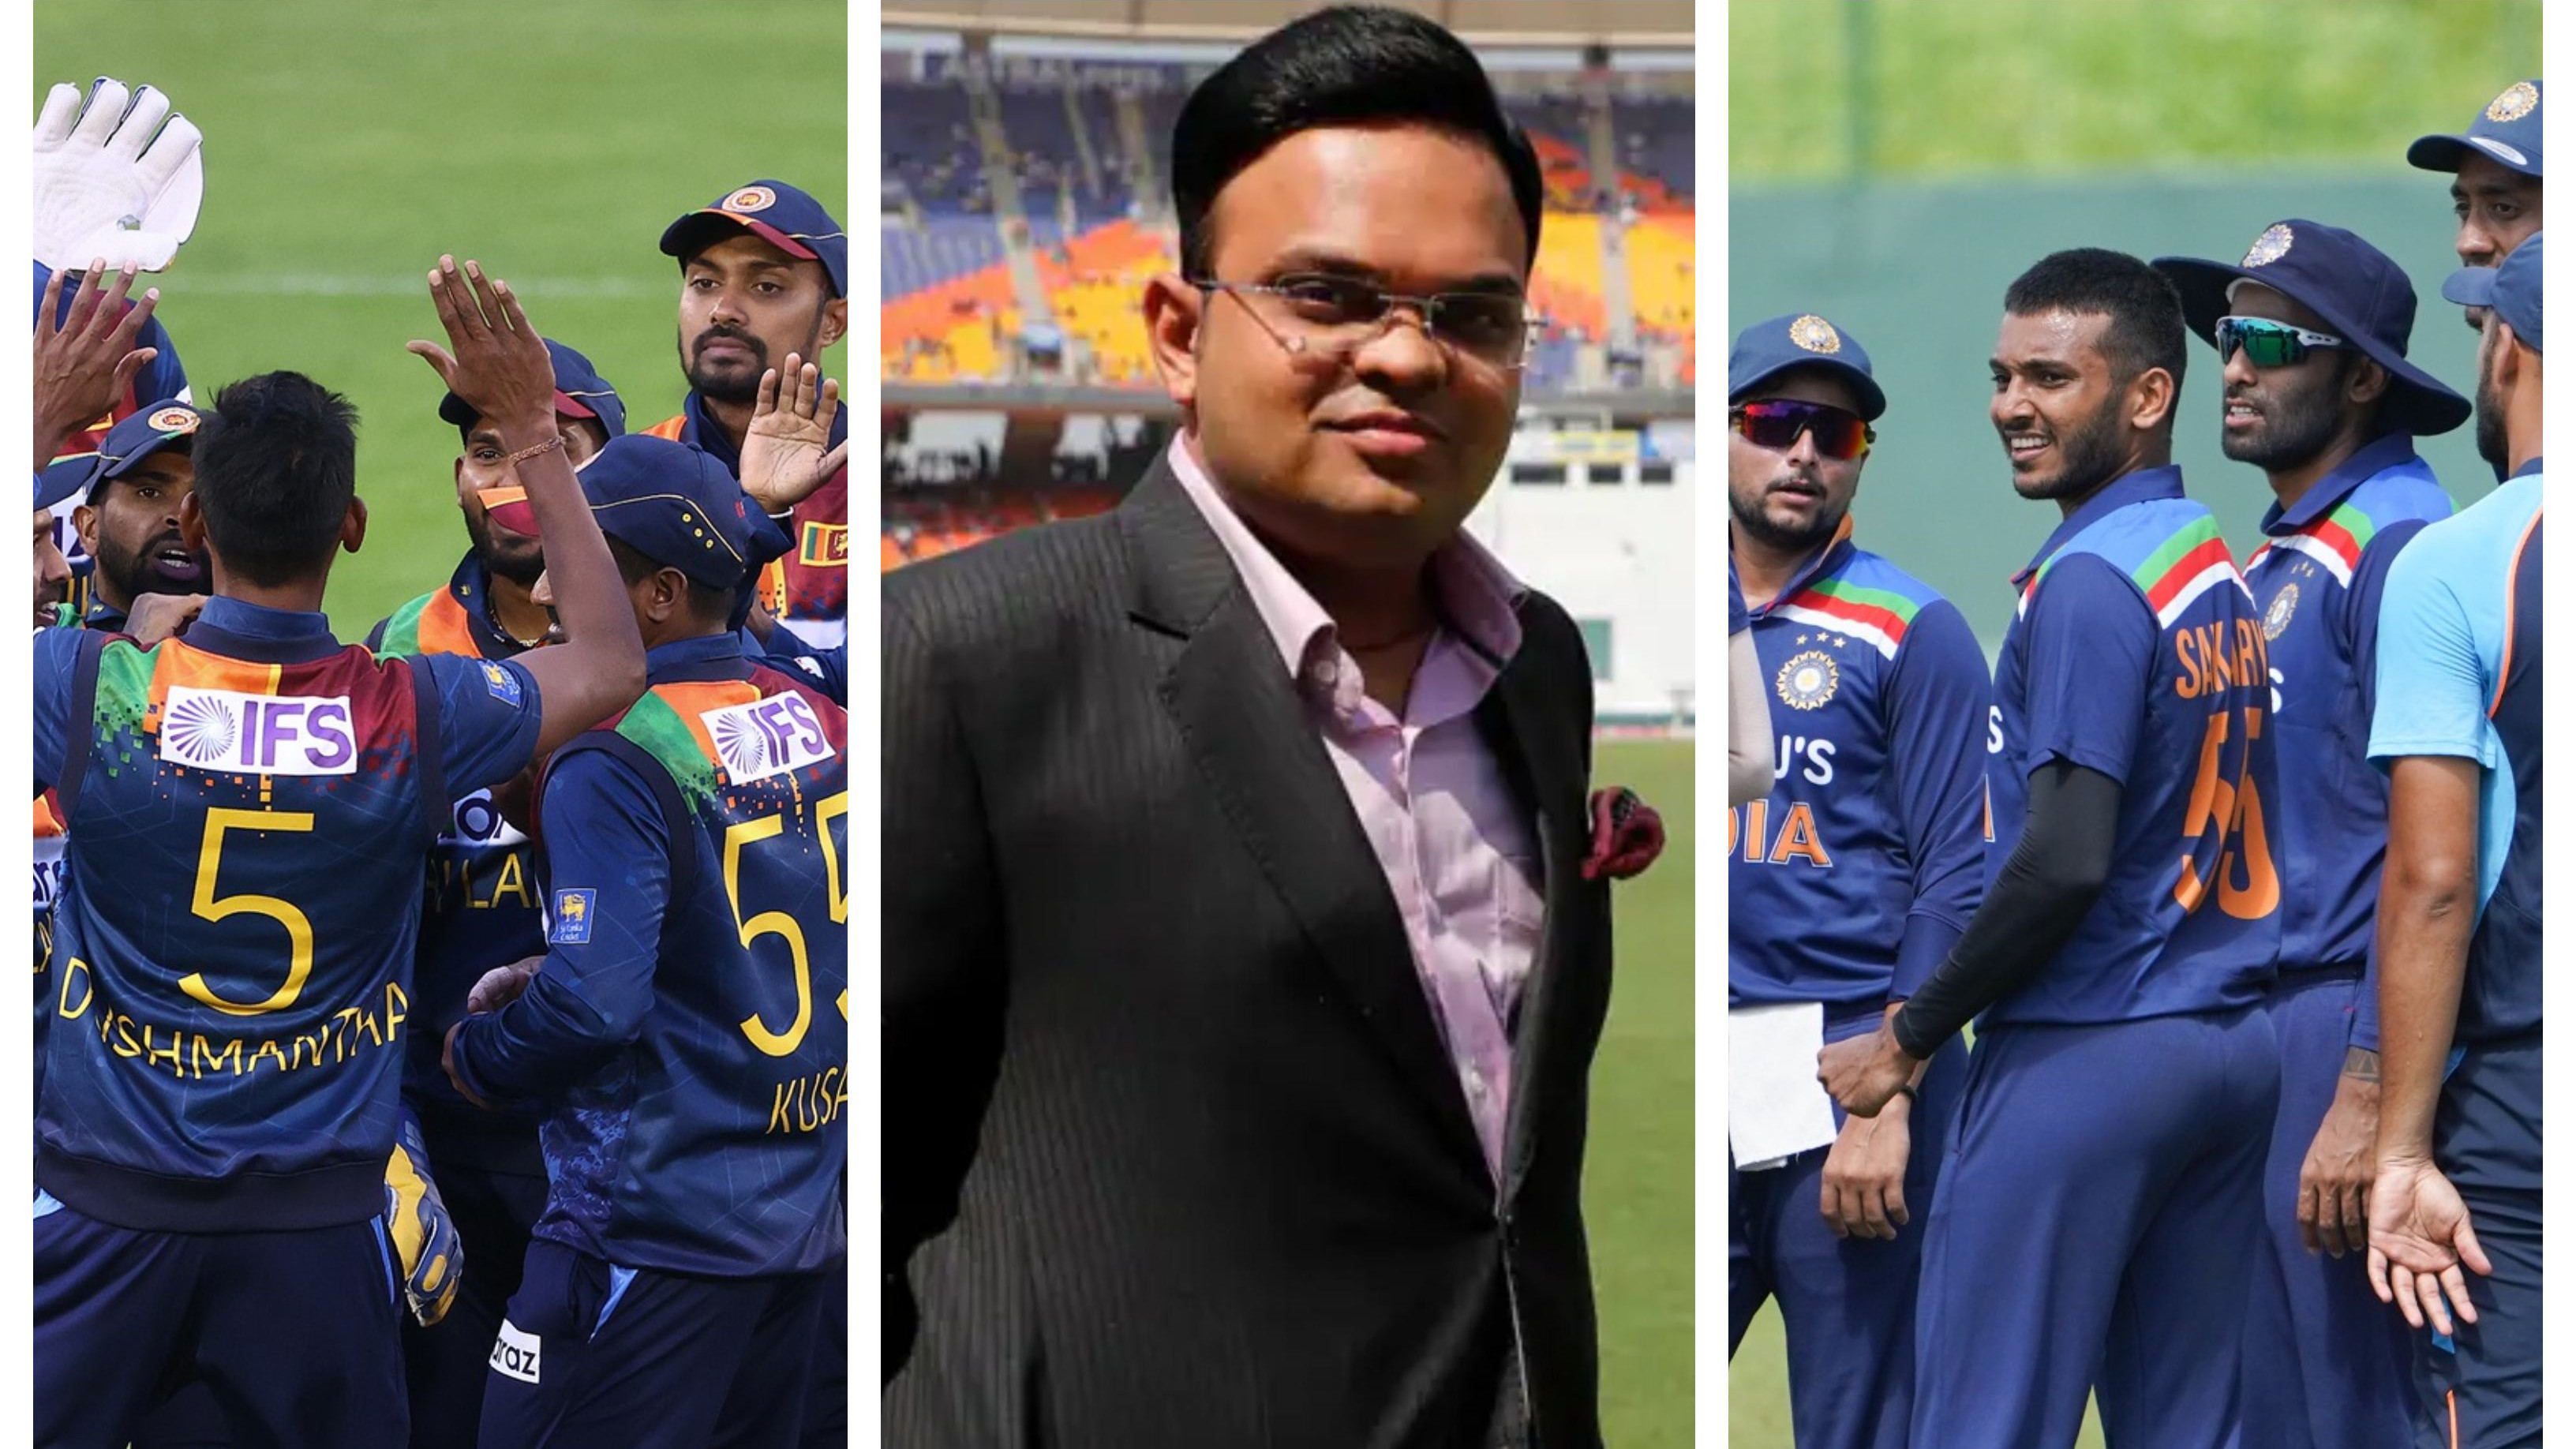 SL v IND 2021: ODI series to get underway on July 18, confirms BCCI Secretary Jay Shah